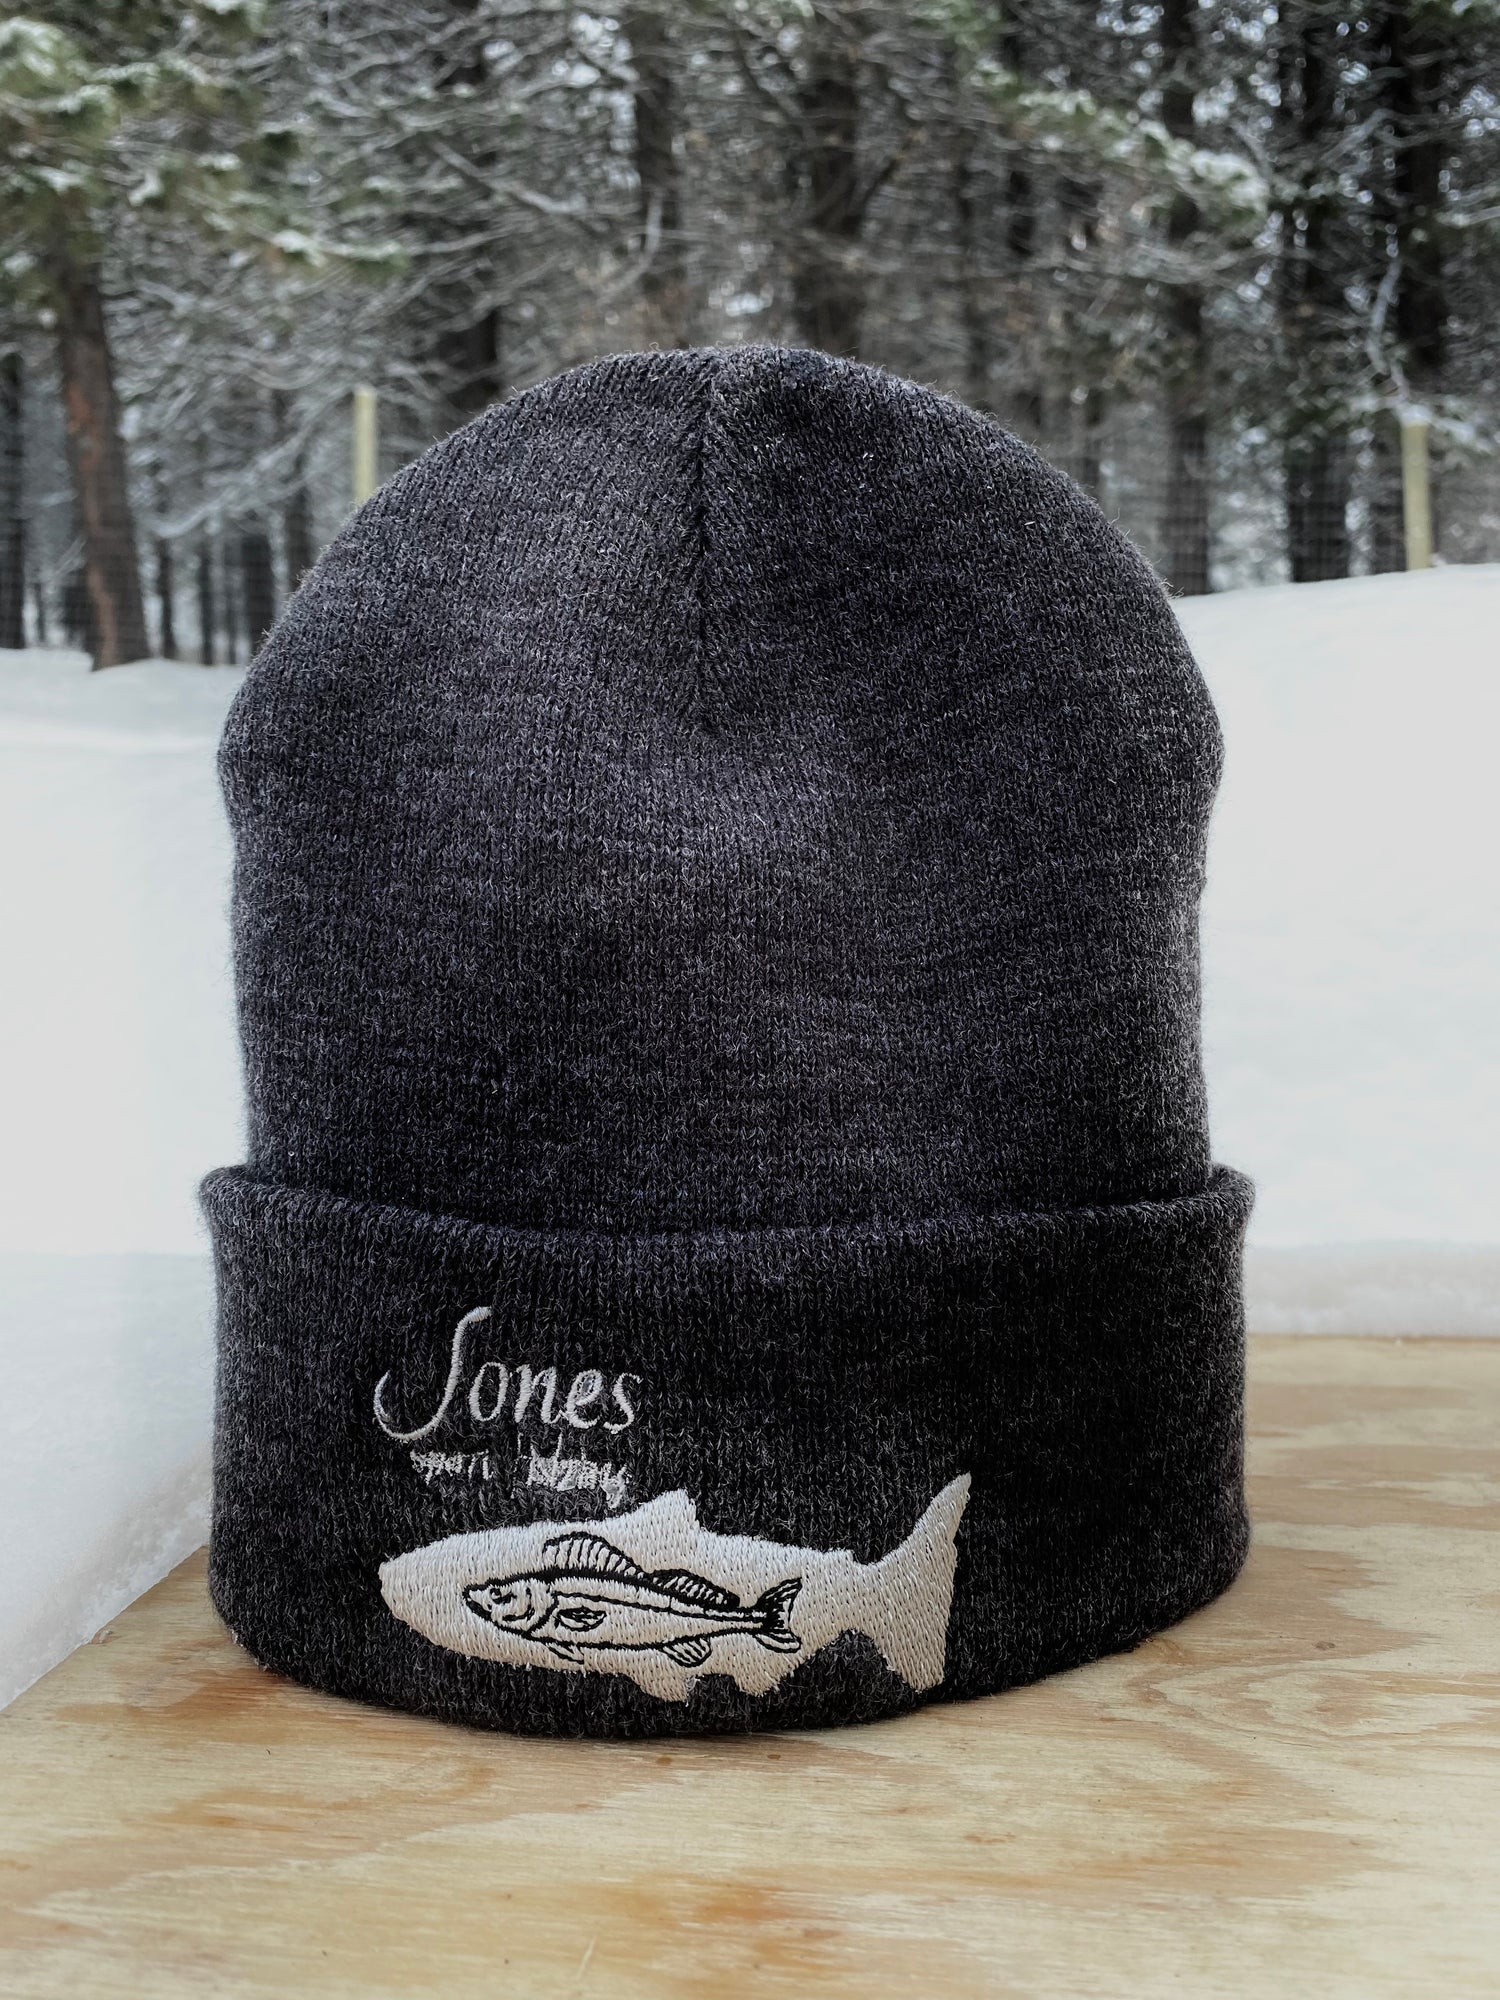 Jones Sport Fishing Merchandise – Jones Sport Fishing LLC